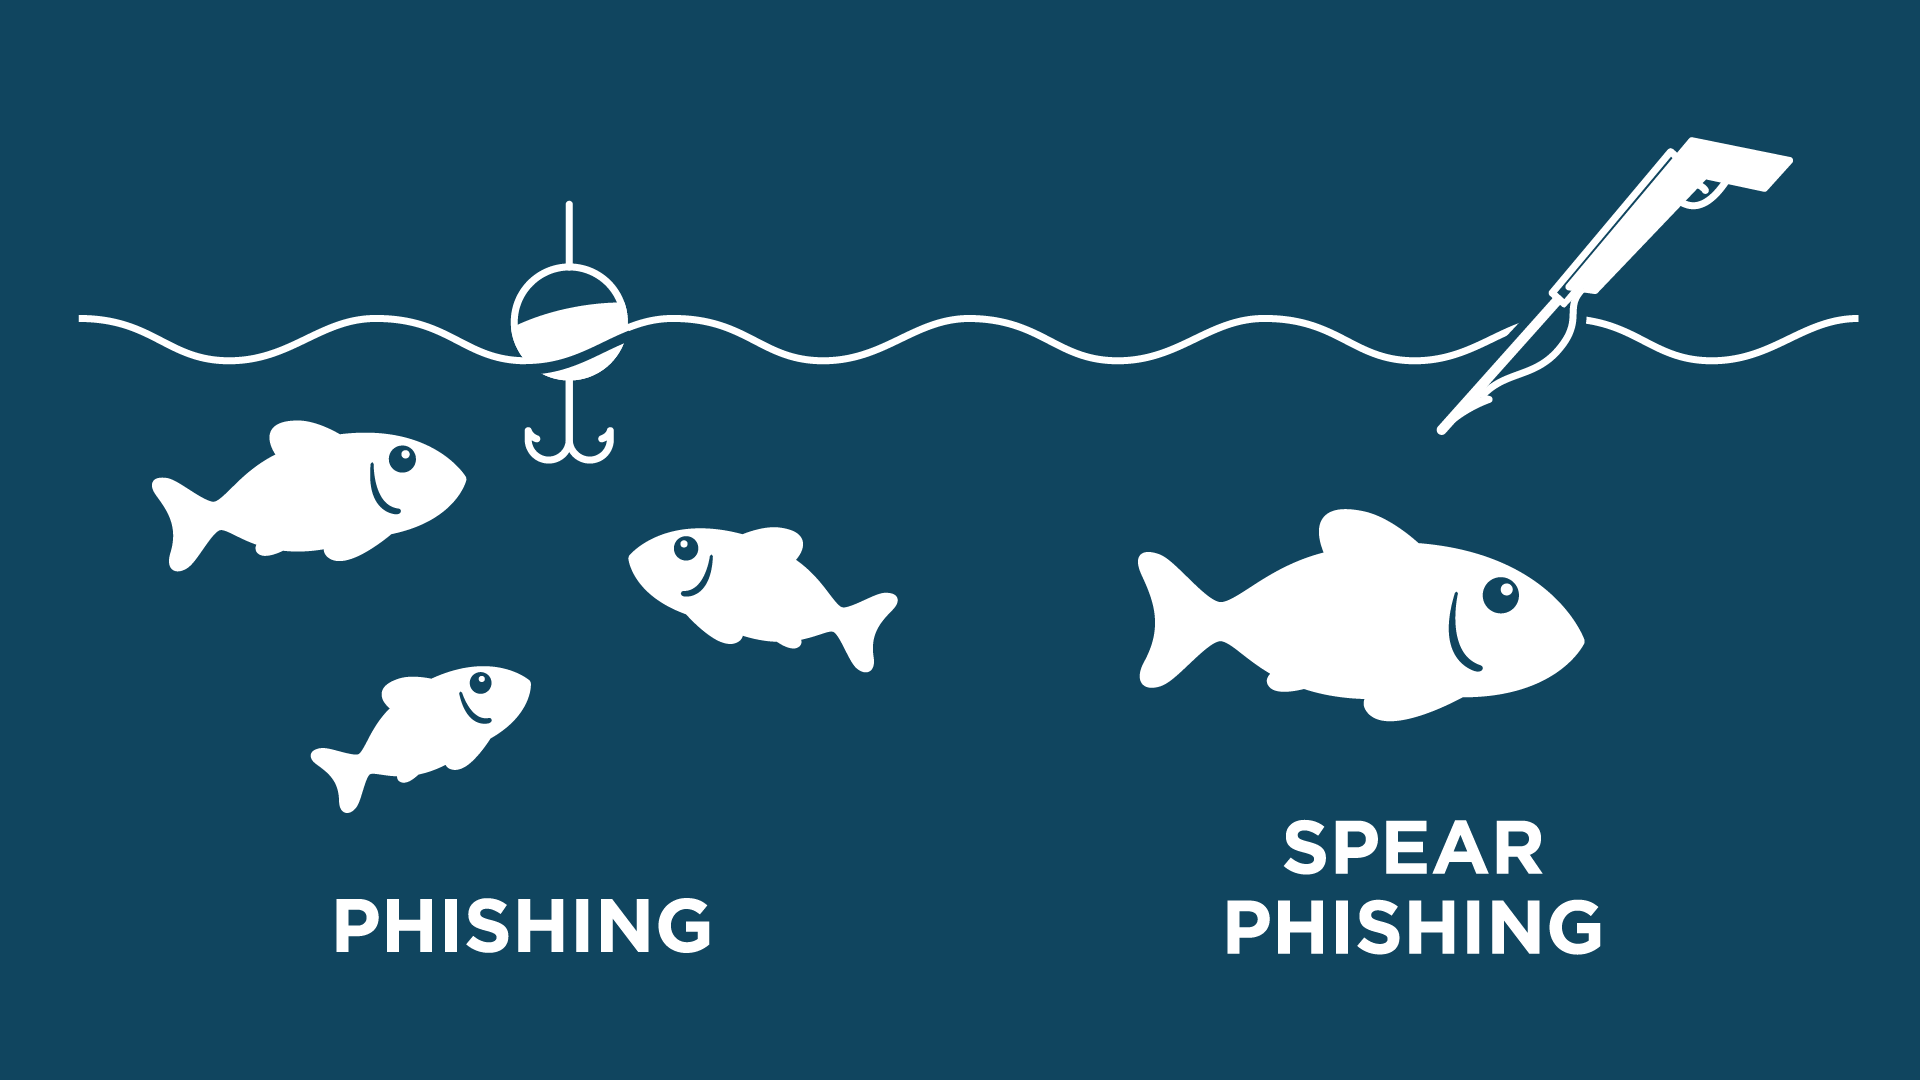 Differenza tra phishing e spear phishing